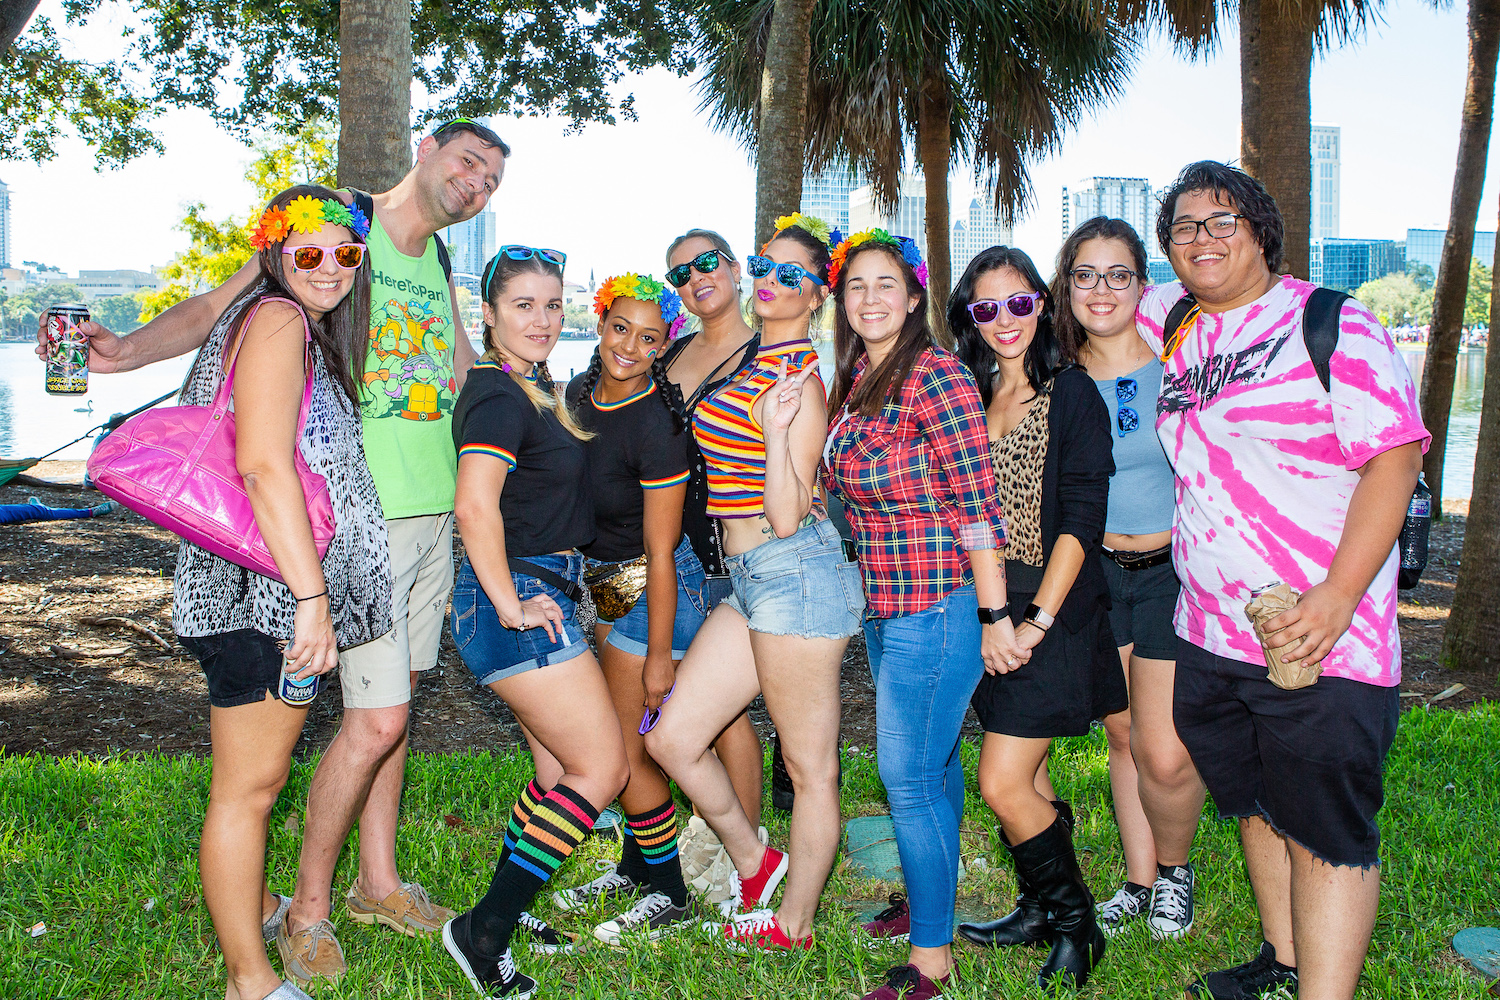 11 Reasons to Make Orlando Your Must-Visit Fall Getaway